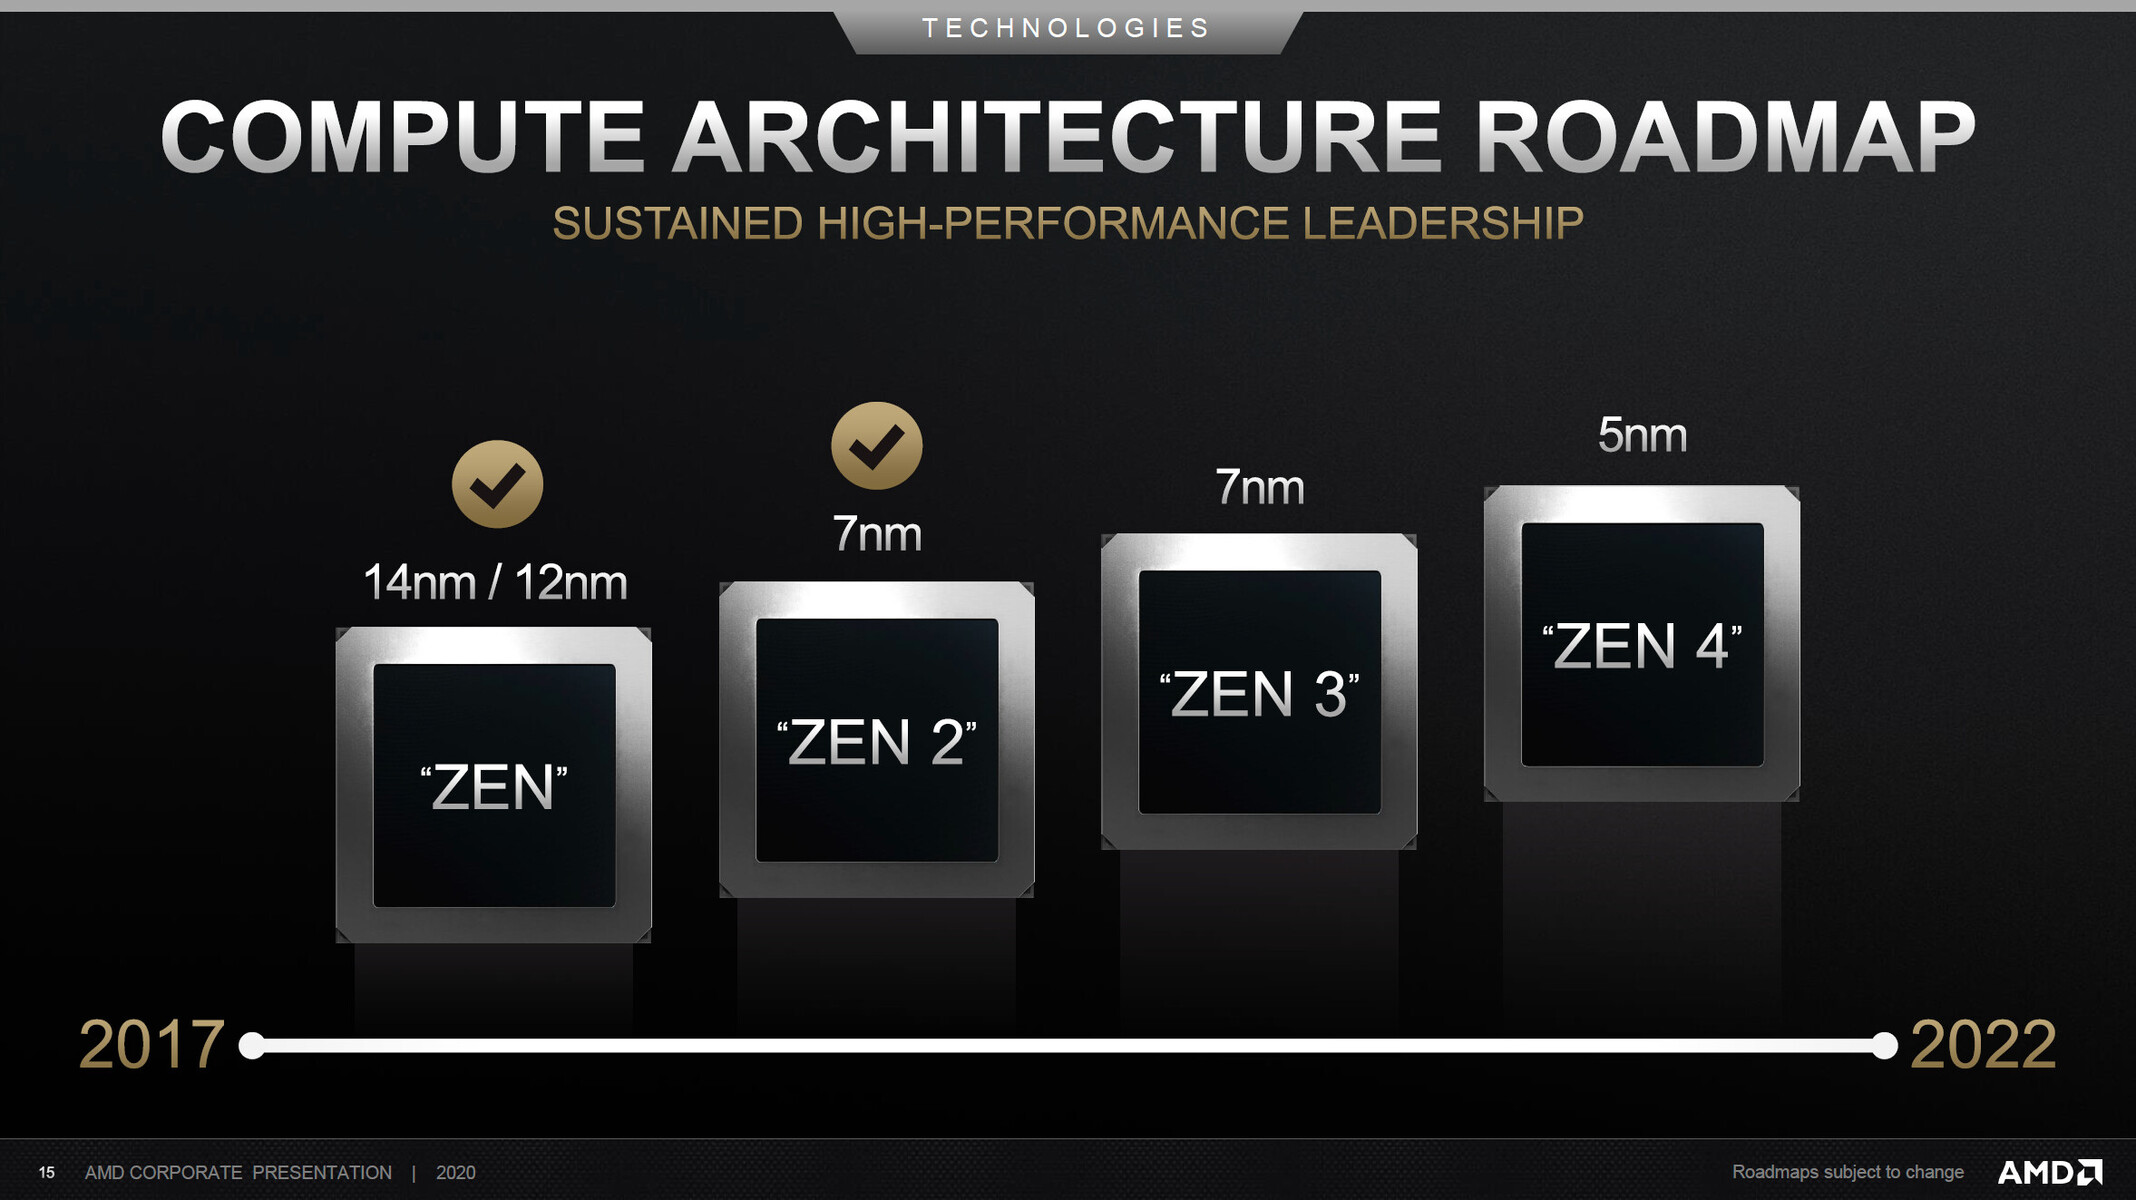 jzrbtz2lxwvclafs AMD เผยโรดแมปยืนยันซีพียู ZEN4 จะใช้สถาปัตย์ขนาด 5nm และเผยผลประกอบการในไตรมาสที่ 2 ปี 2563 มีรายรับ 1.93 พันล้านดอลลาร์ เพิ่มขึ้น 26%